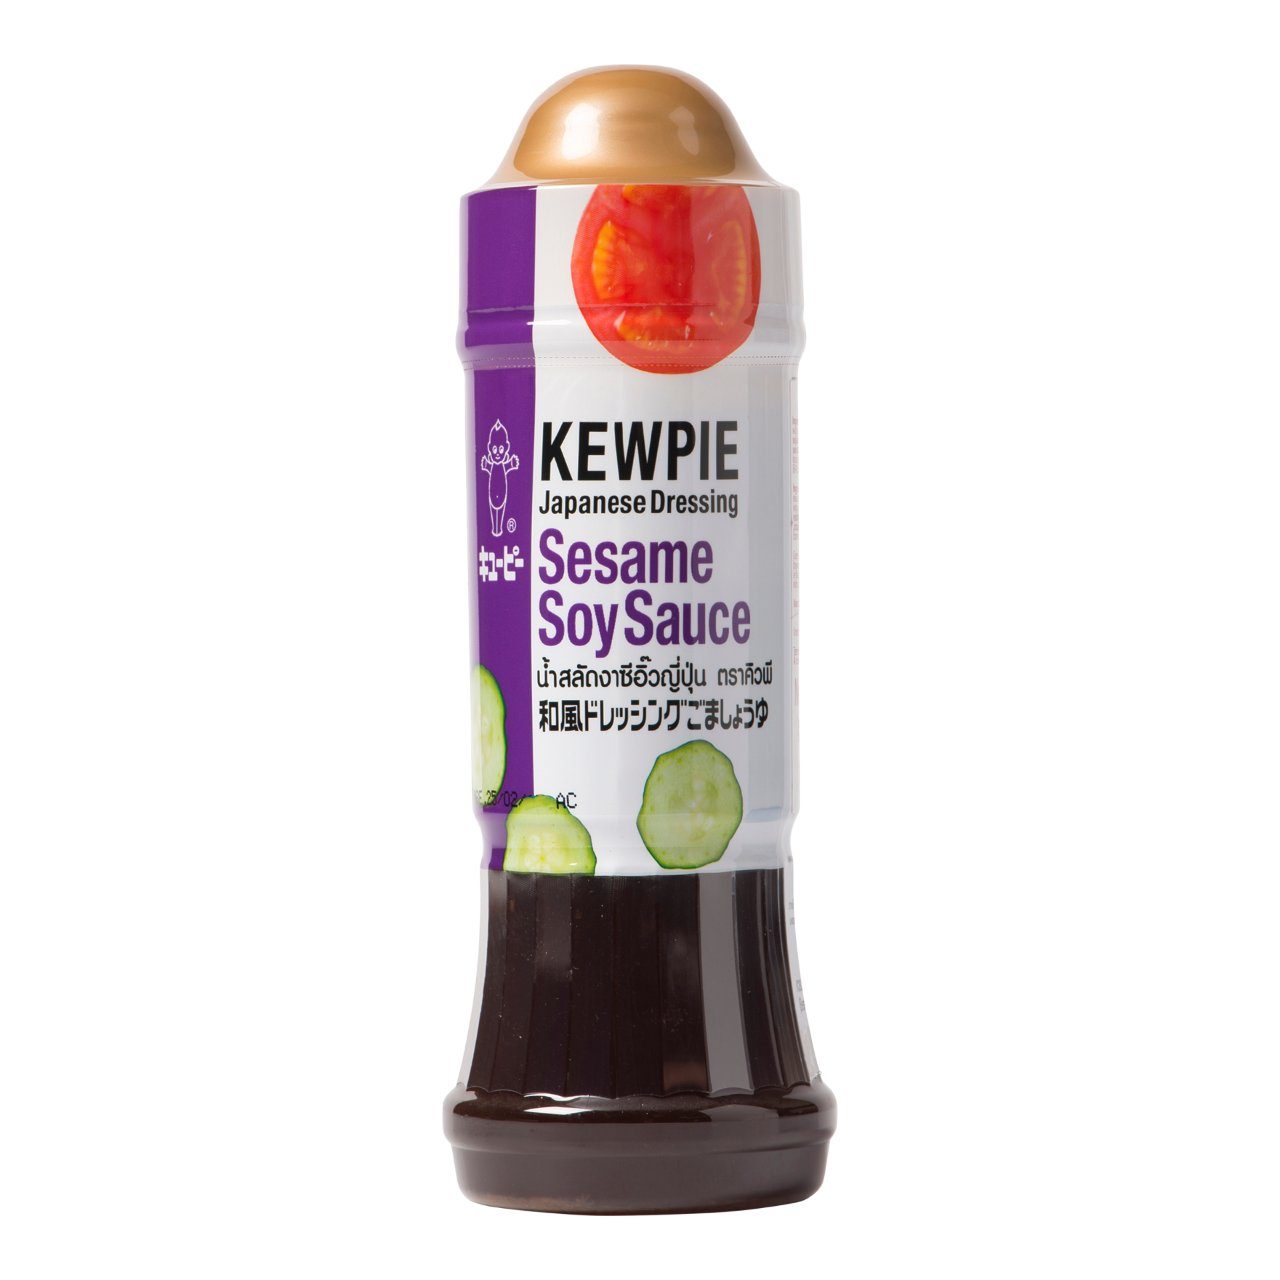 Kewpie sesam soysauce dressing